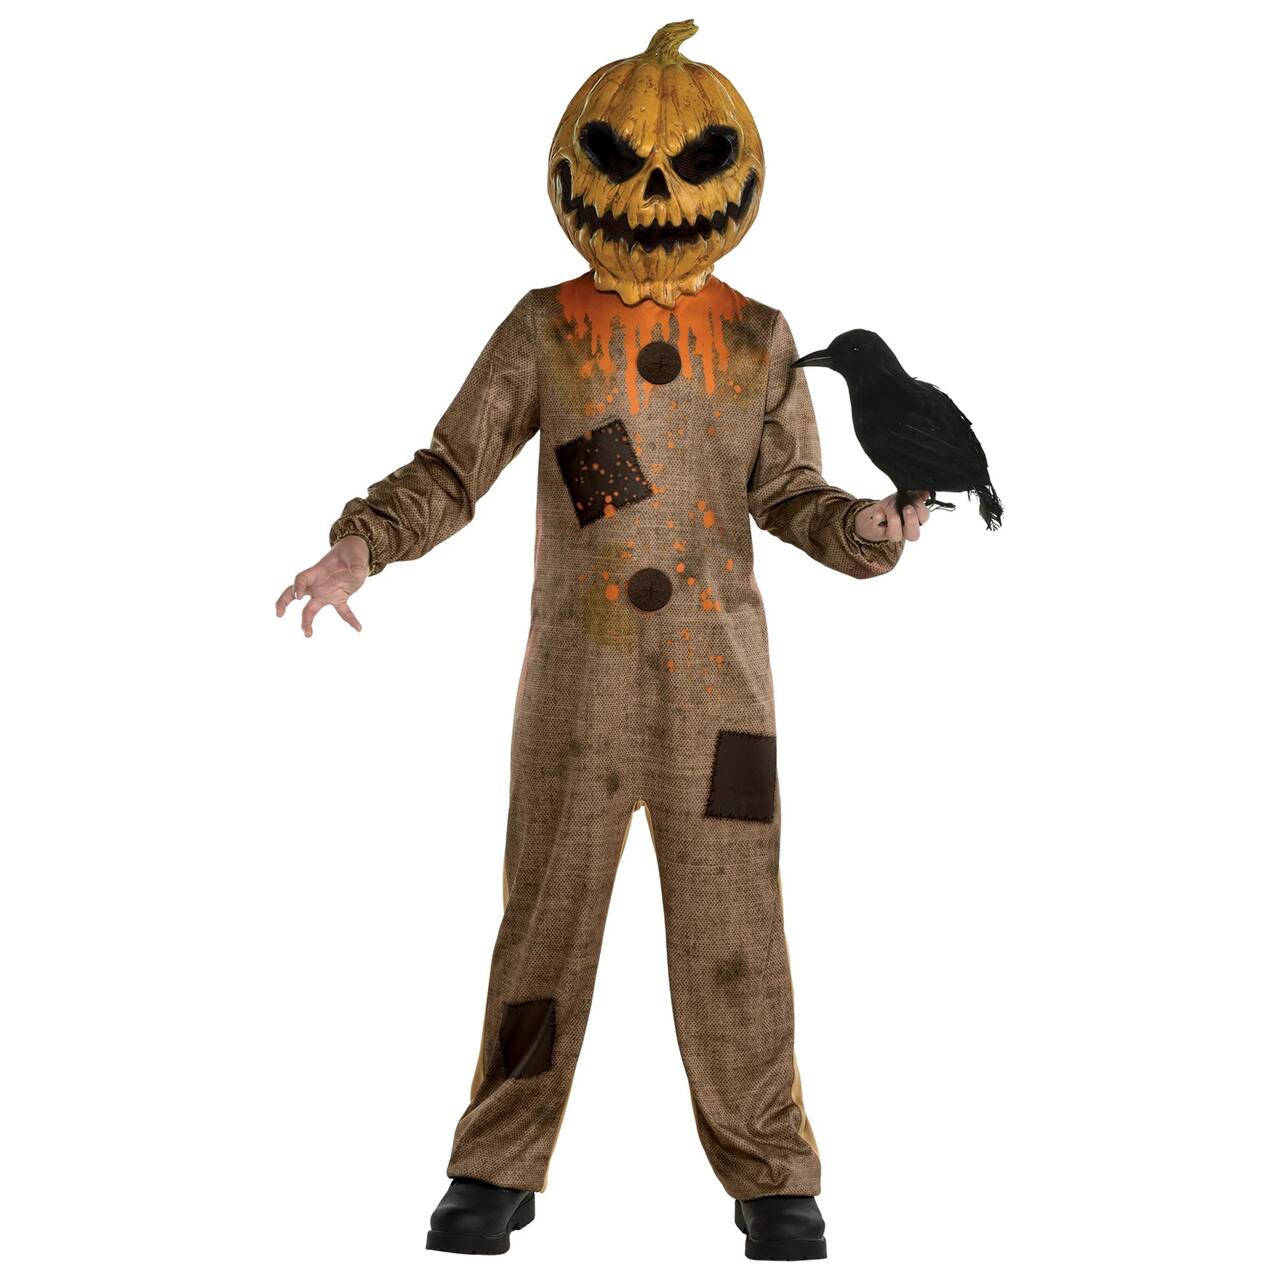 Rotten Pumpkin Child Costume